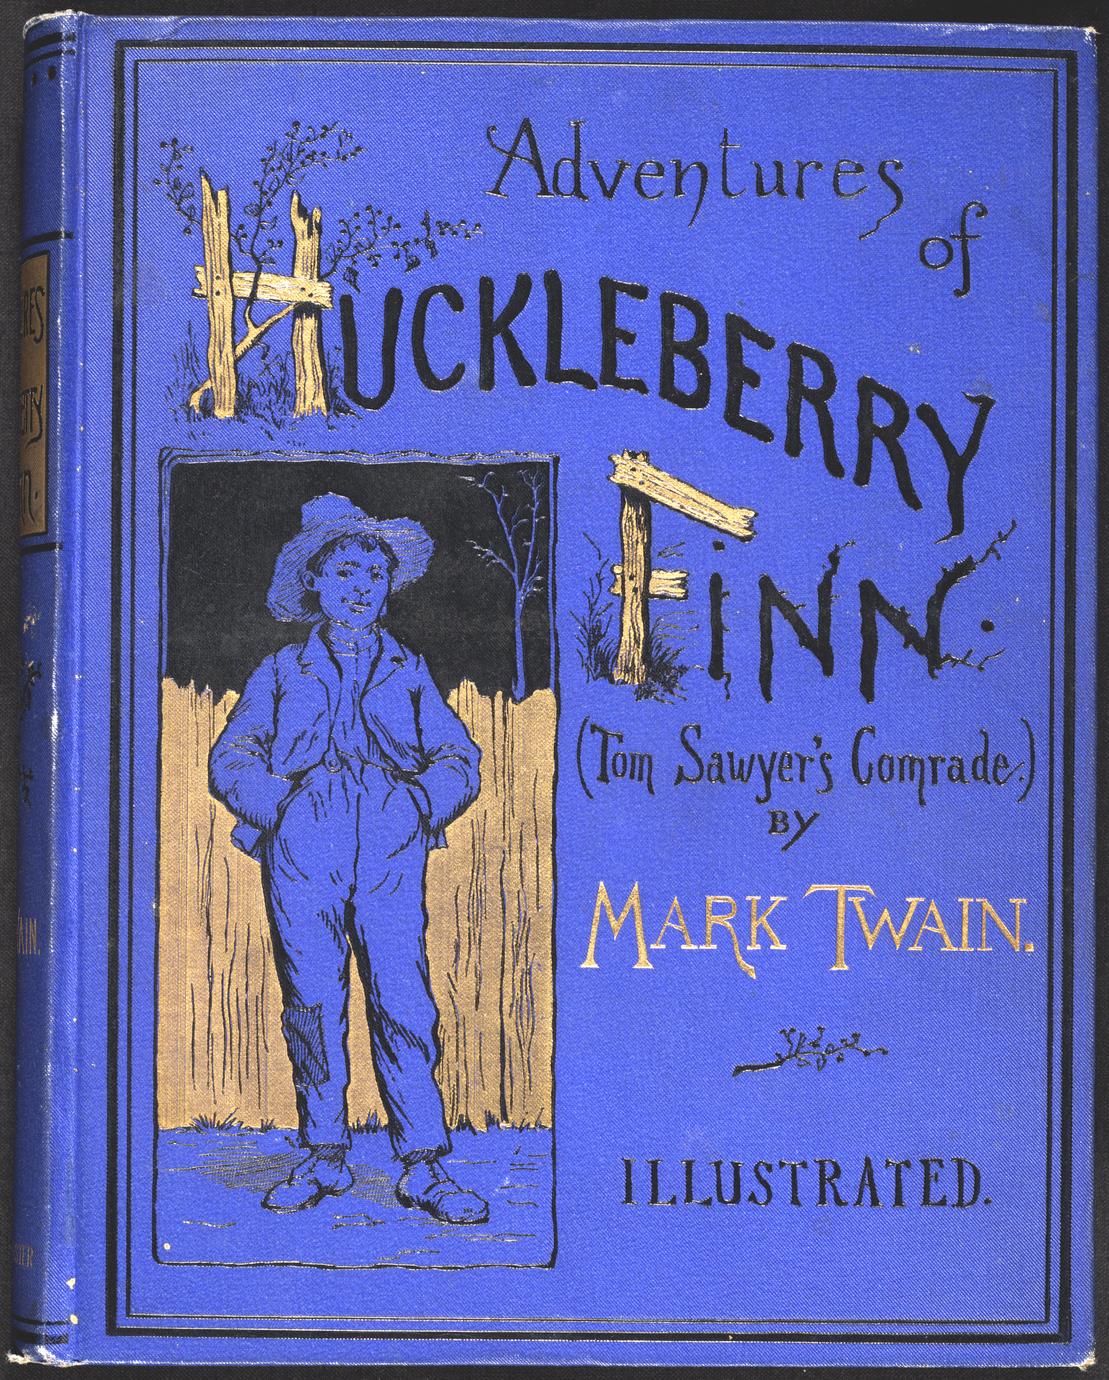 Adventures of Huckleberry Finn (Tom Sawyer's comrade) (1 of 2)